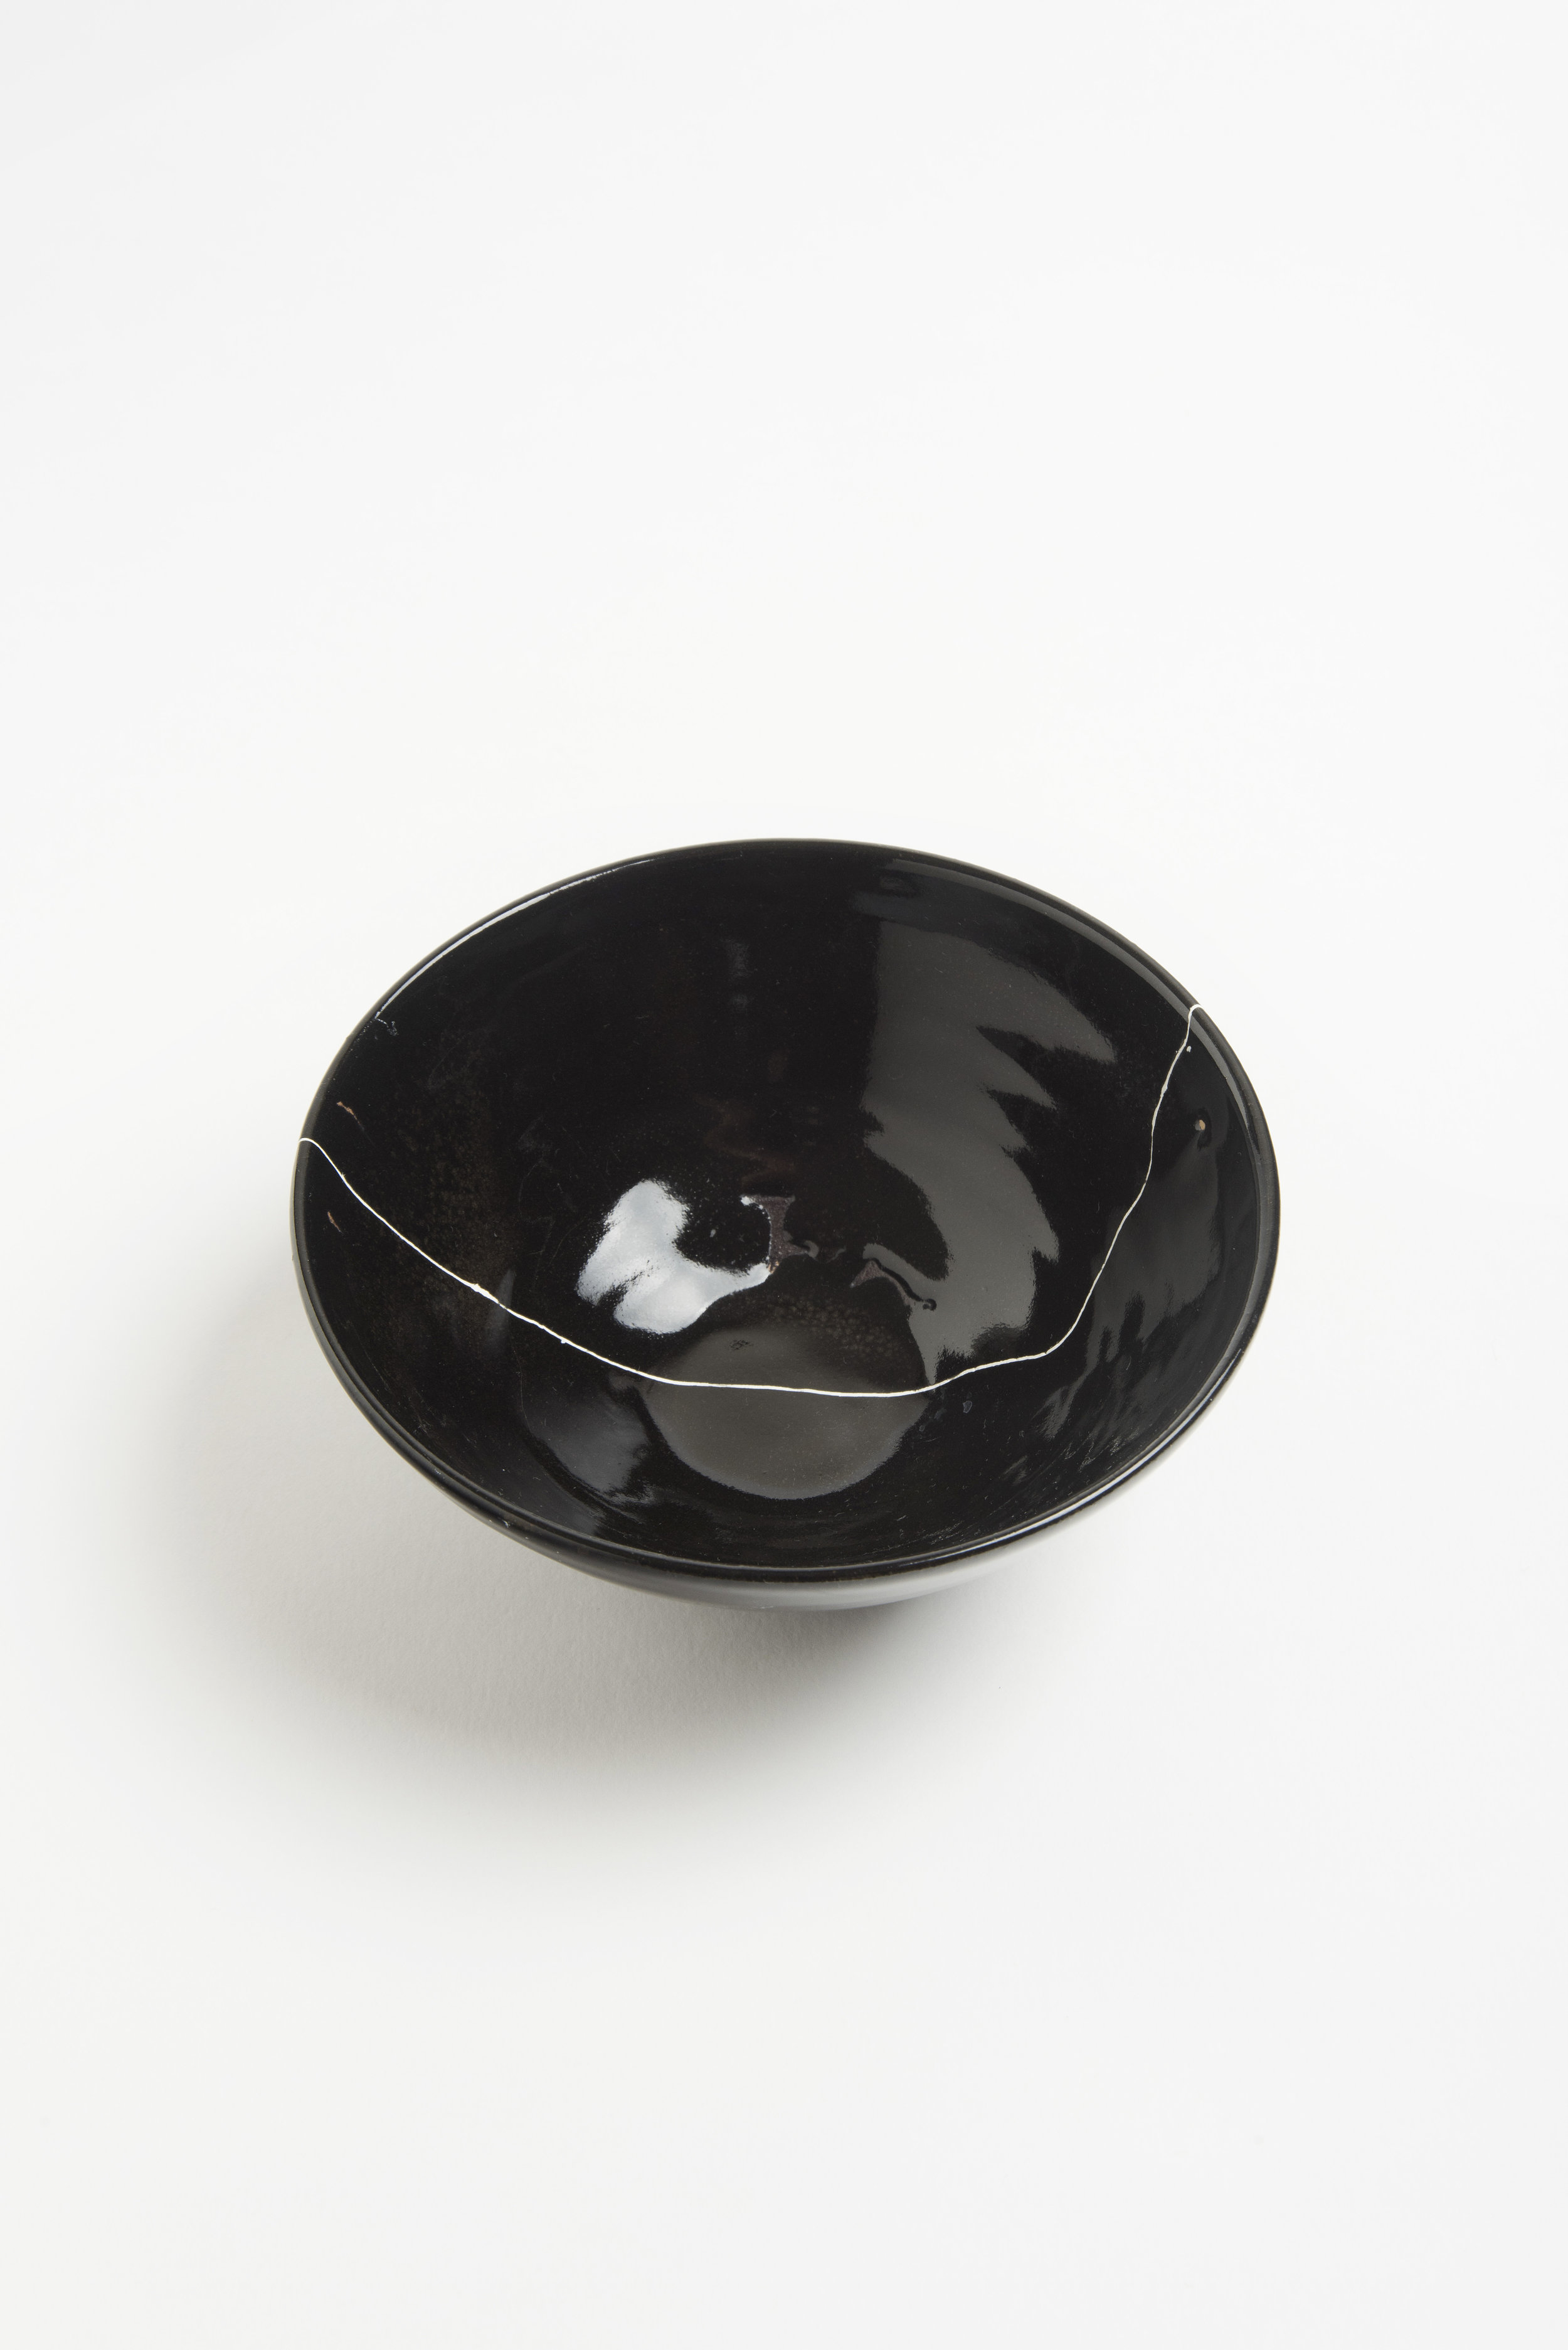 black-fracture-series-bowl-romy-northover-ceramics-the-garnered-46.jpg